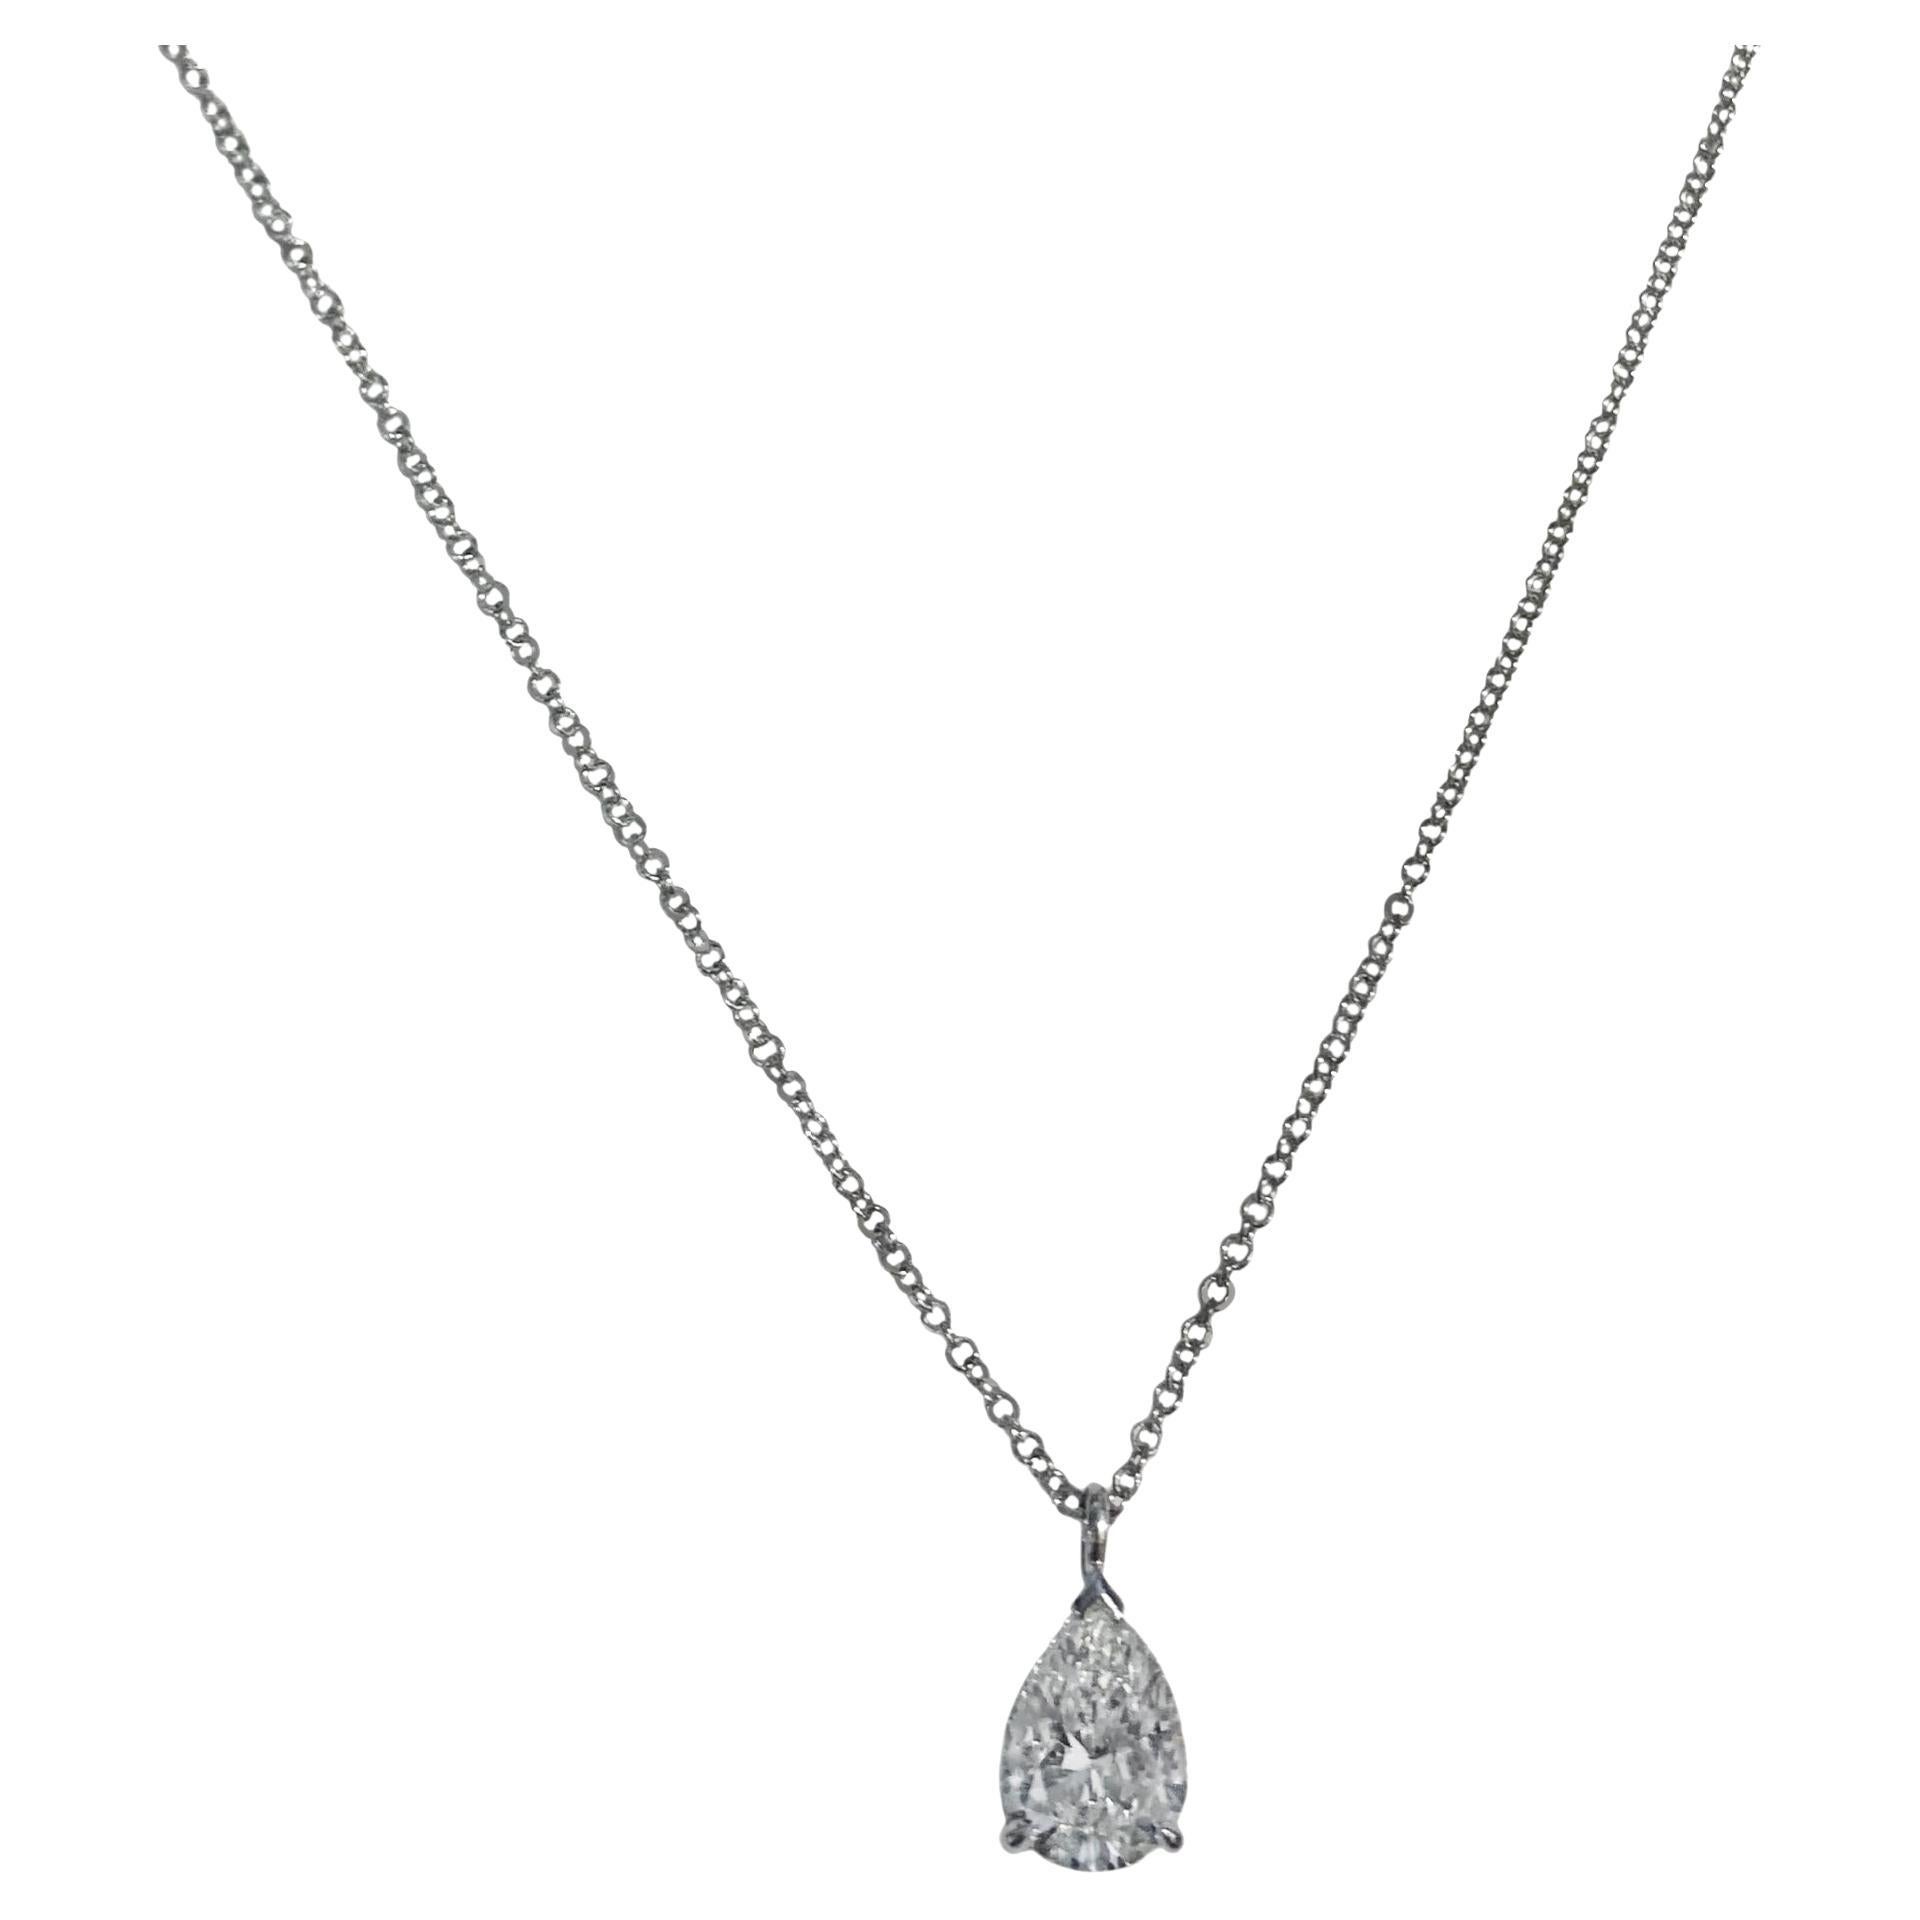 Tiffany & Co. Platinum Pear Shaped Diamond Necklace